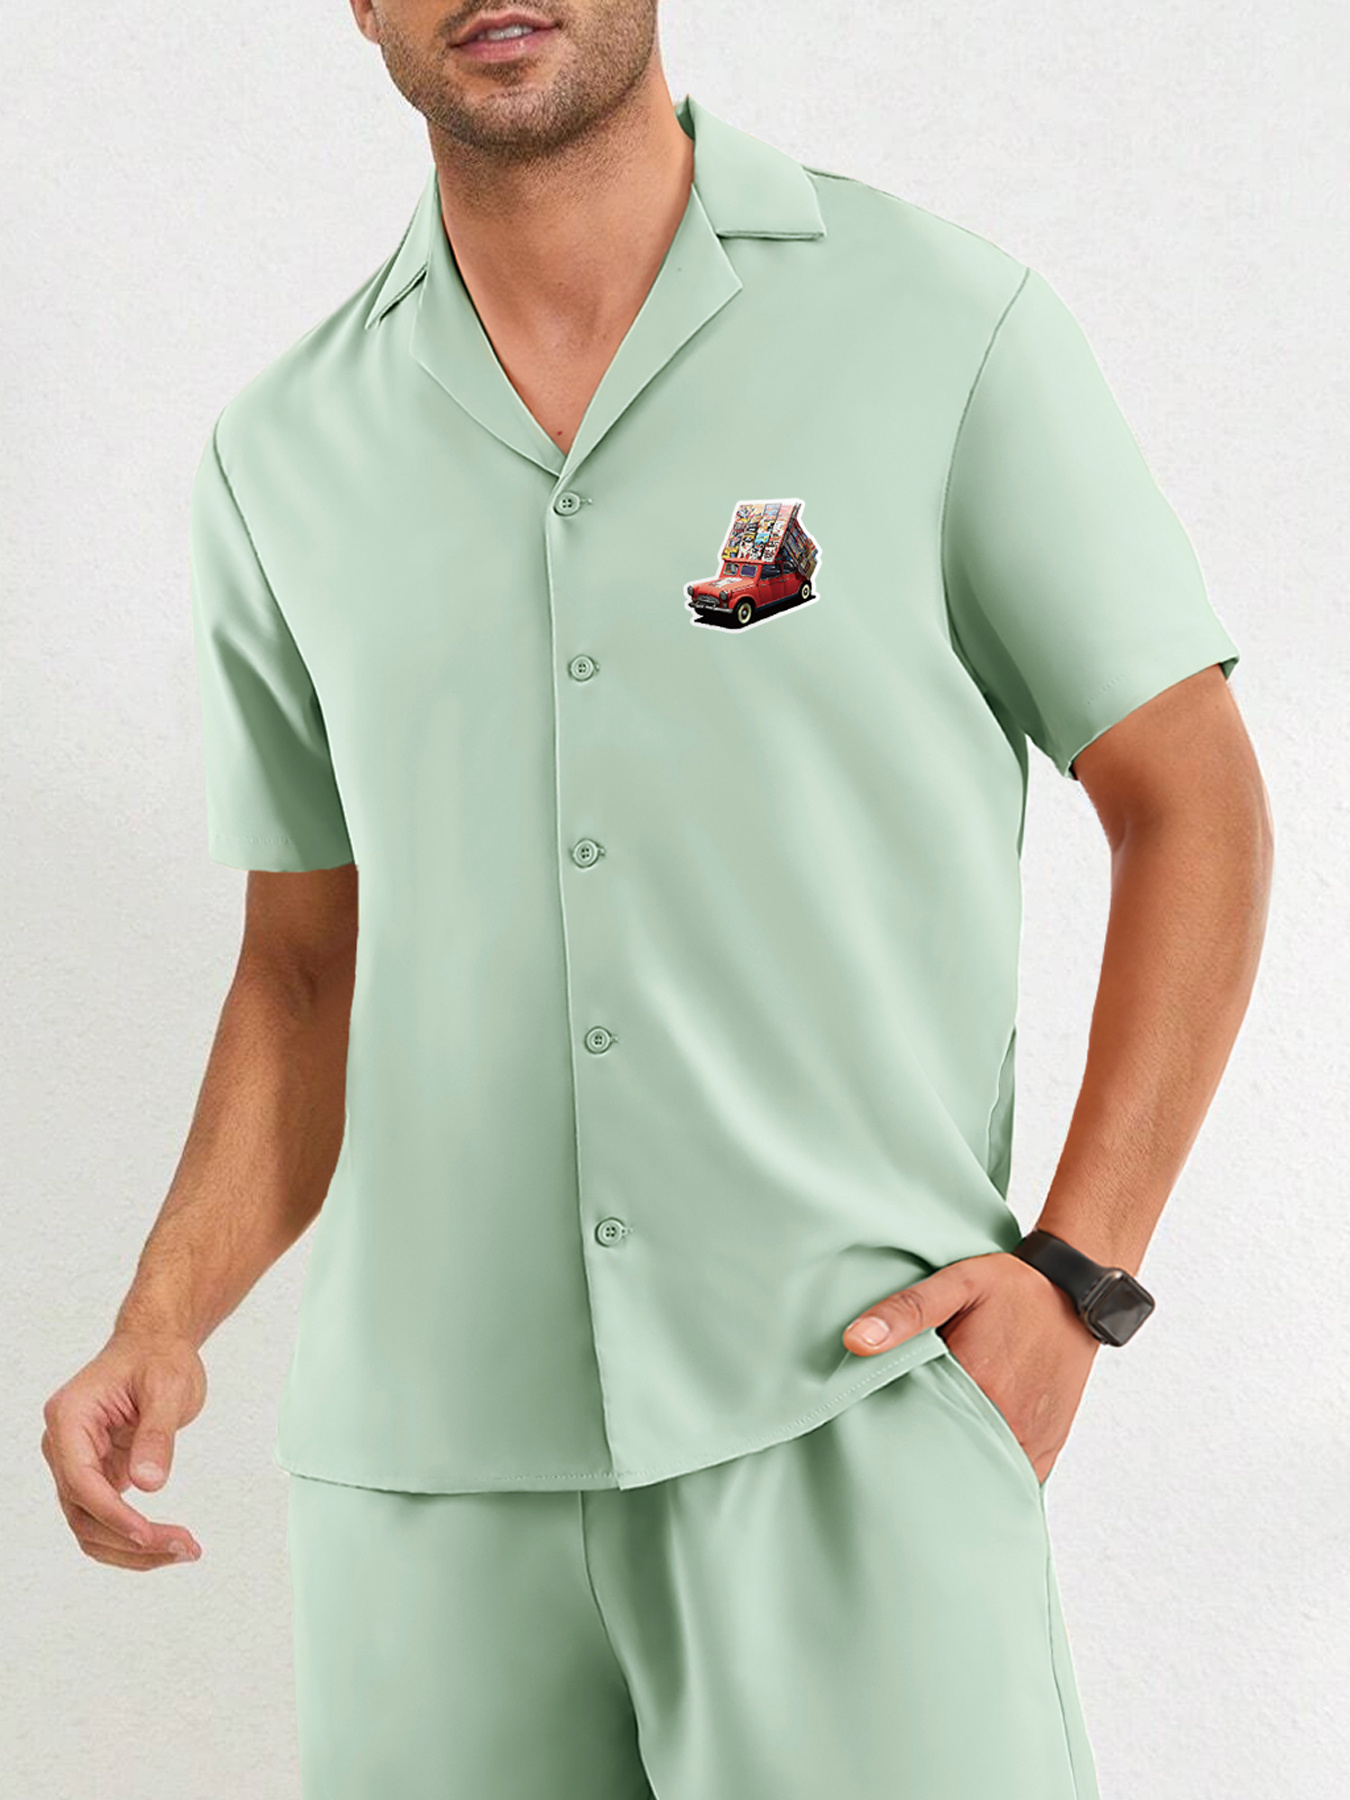 Eagles Men's Bowling Polo Shirt Short Sleeve